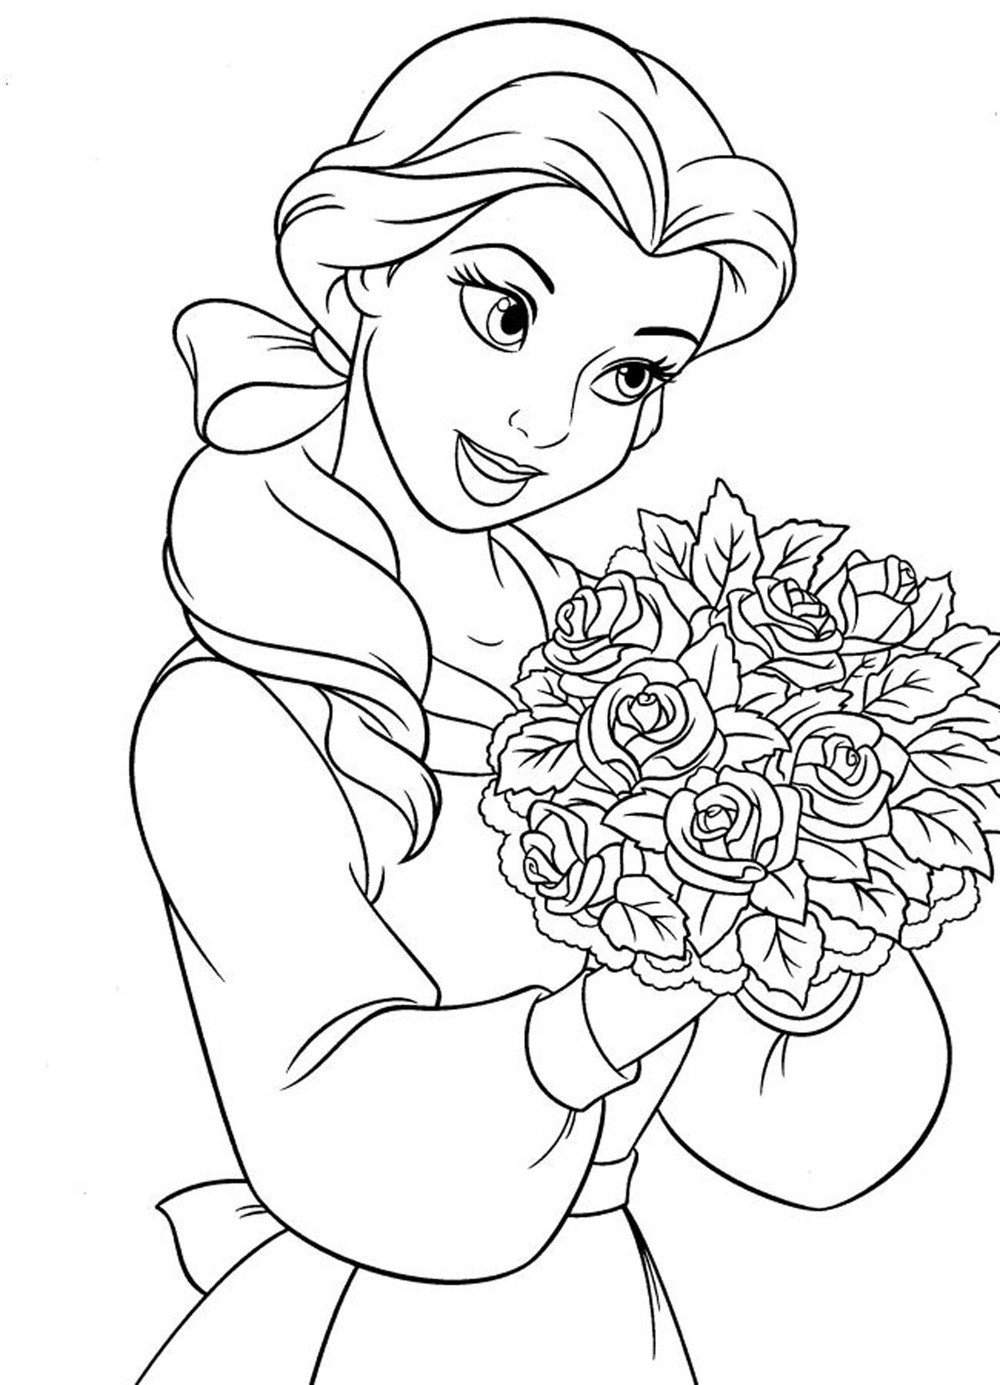 Printable Coloring Pages Disney
 Disney Princess Tiana Coloring Page Disney